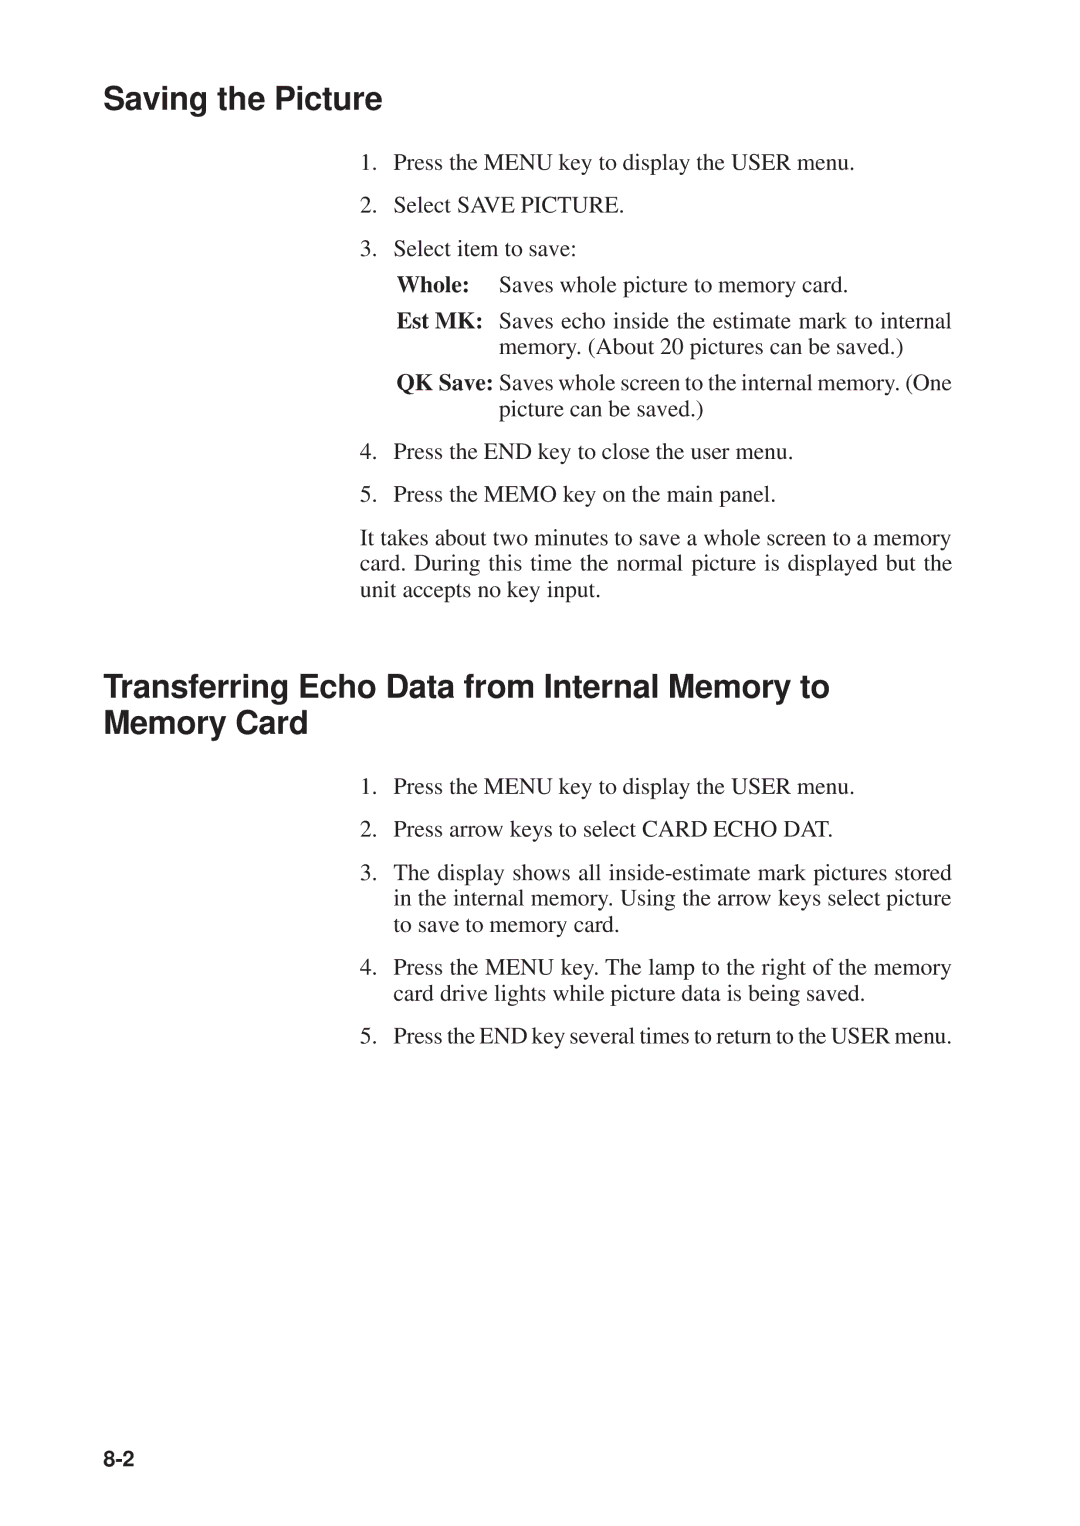 Furuno MODEL CSH-73 manual Saving the Picture, Transferring Echo Data from Internal Memory to Memory Card 